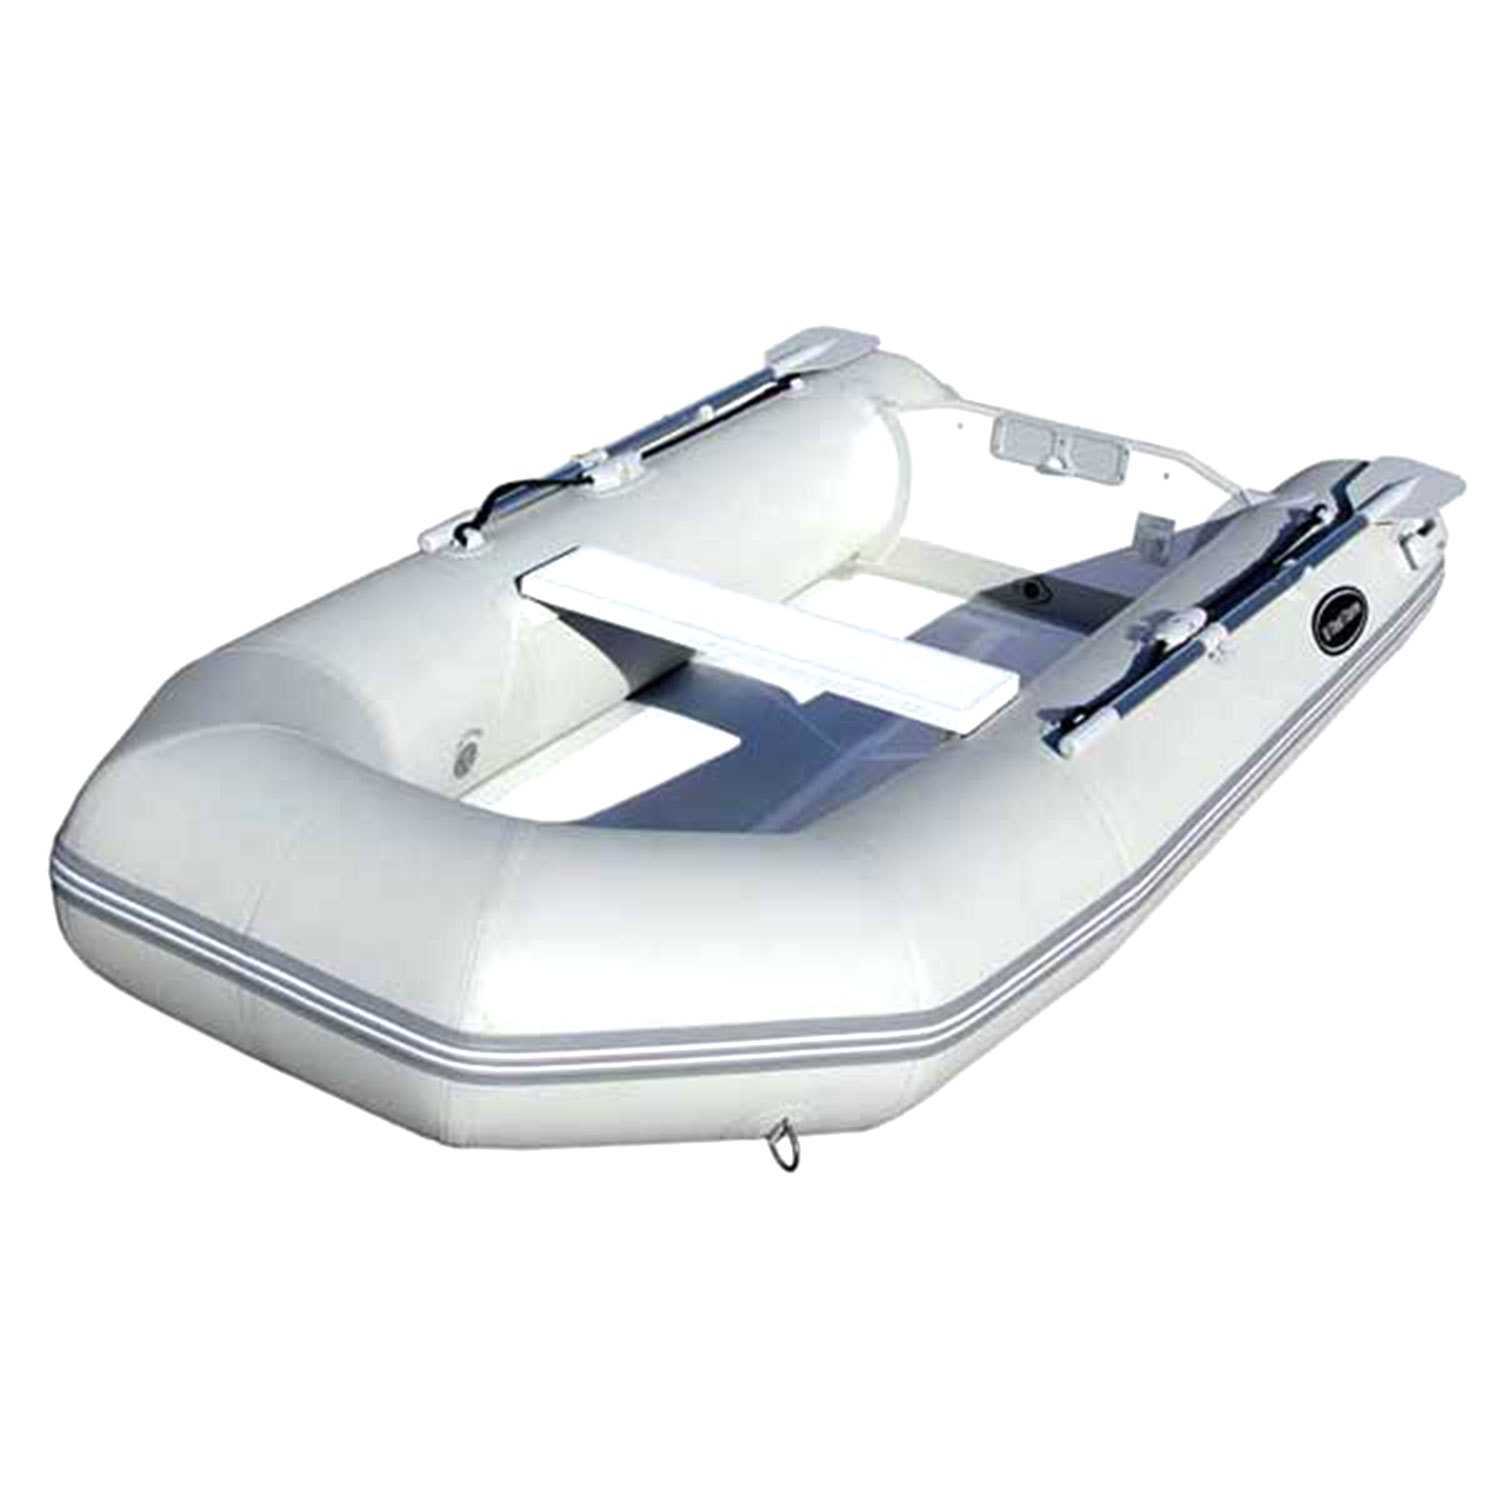 WEST MARINE RIB-310 Compact Folding Transom Rigid Inflatable Boat